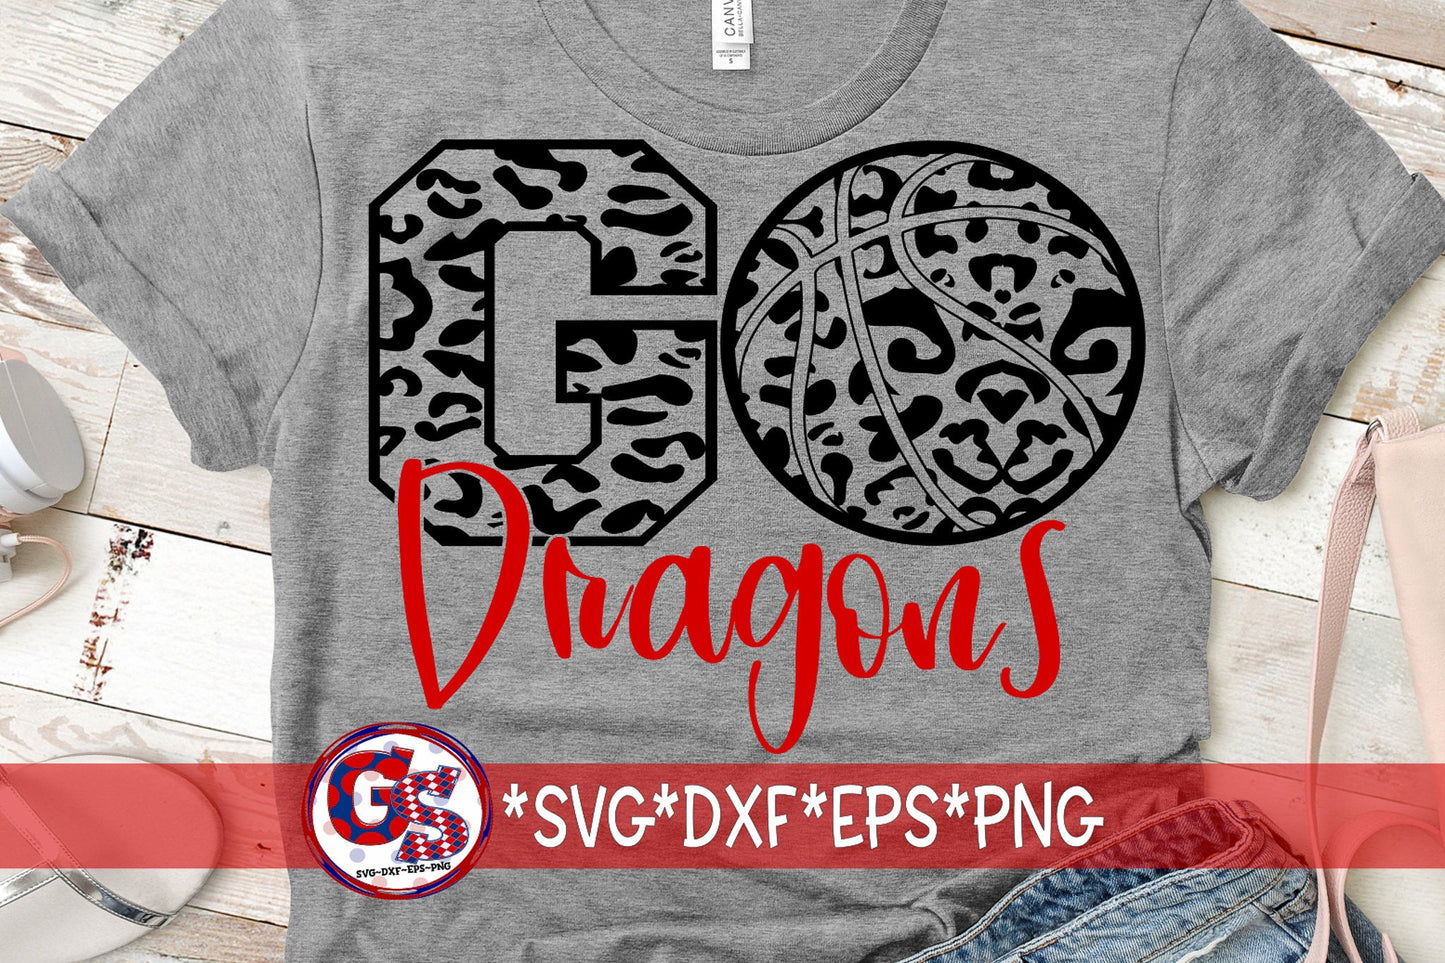 Go Dragons Basketball svg dxf eps png | Dragons SvG | Dragons Basketball Leopard SvG | Dragons DxF | Dragons SvG | Instant Download Cut File